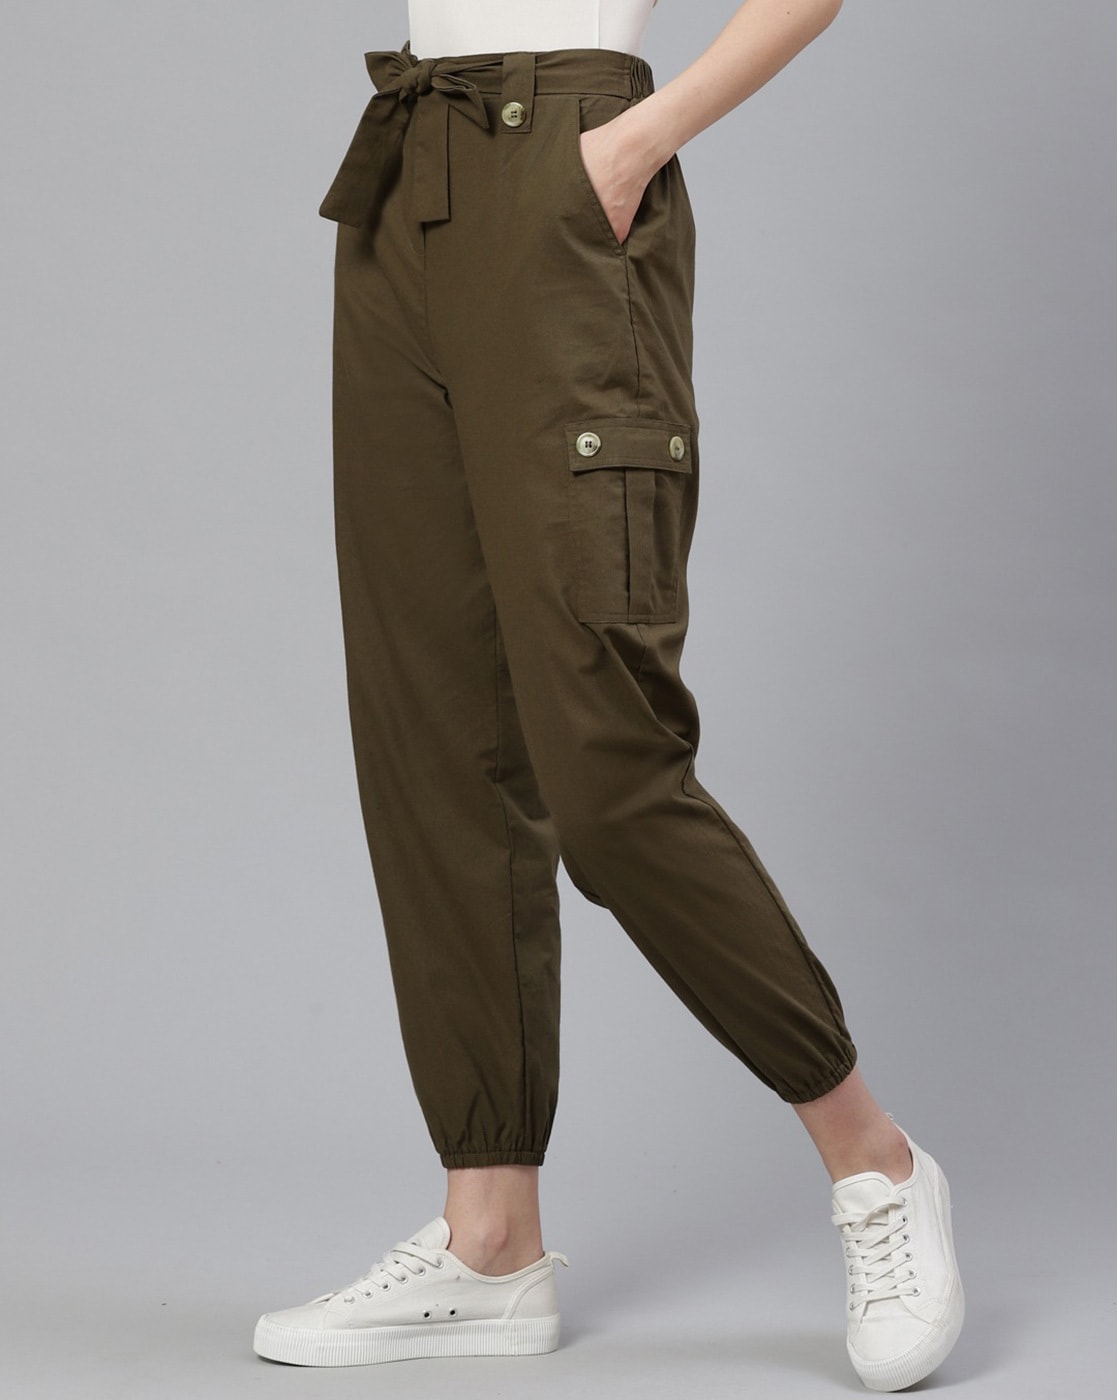 Buy Pattlun Cargo Pants for Women  Girls S Military Green at Amazonin